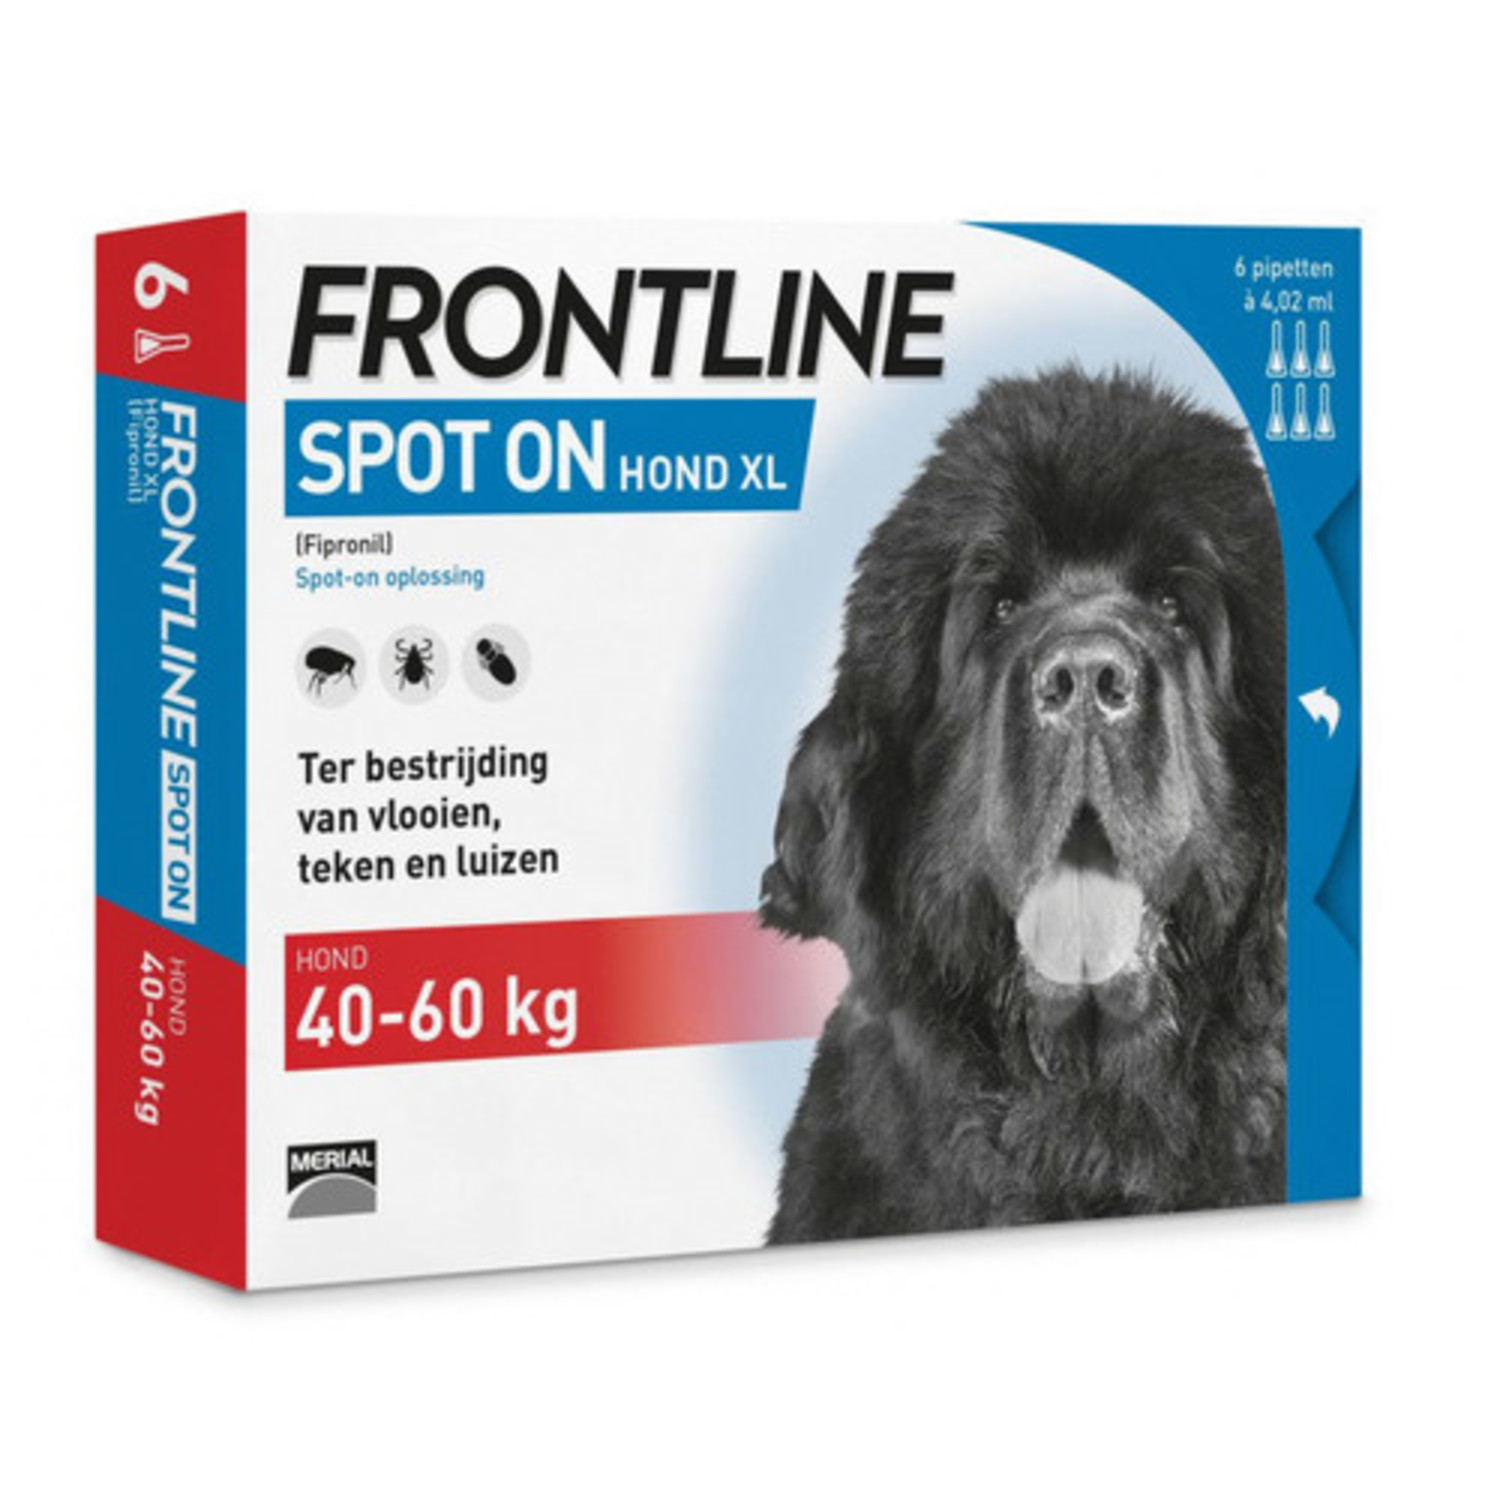 Schipbreuk wasserette Egypte Frontline Spot On Hond XL (40 tot 60 kg) 6 pipetten - Agridiscounter